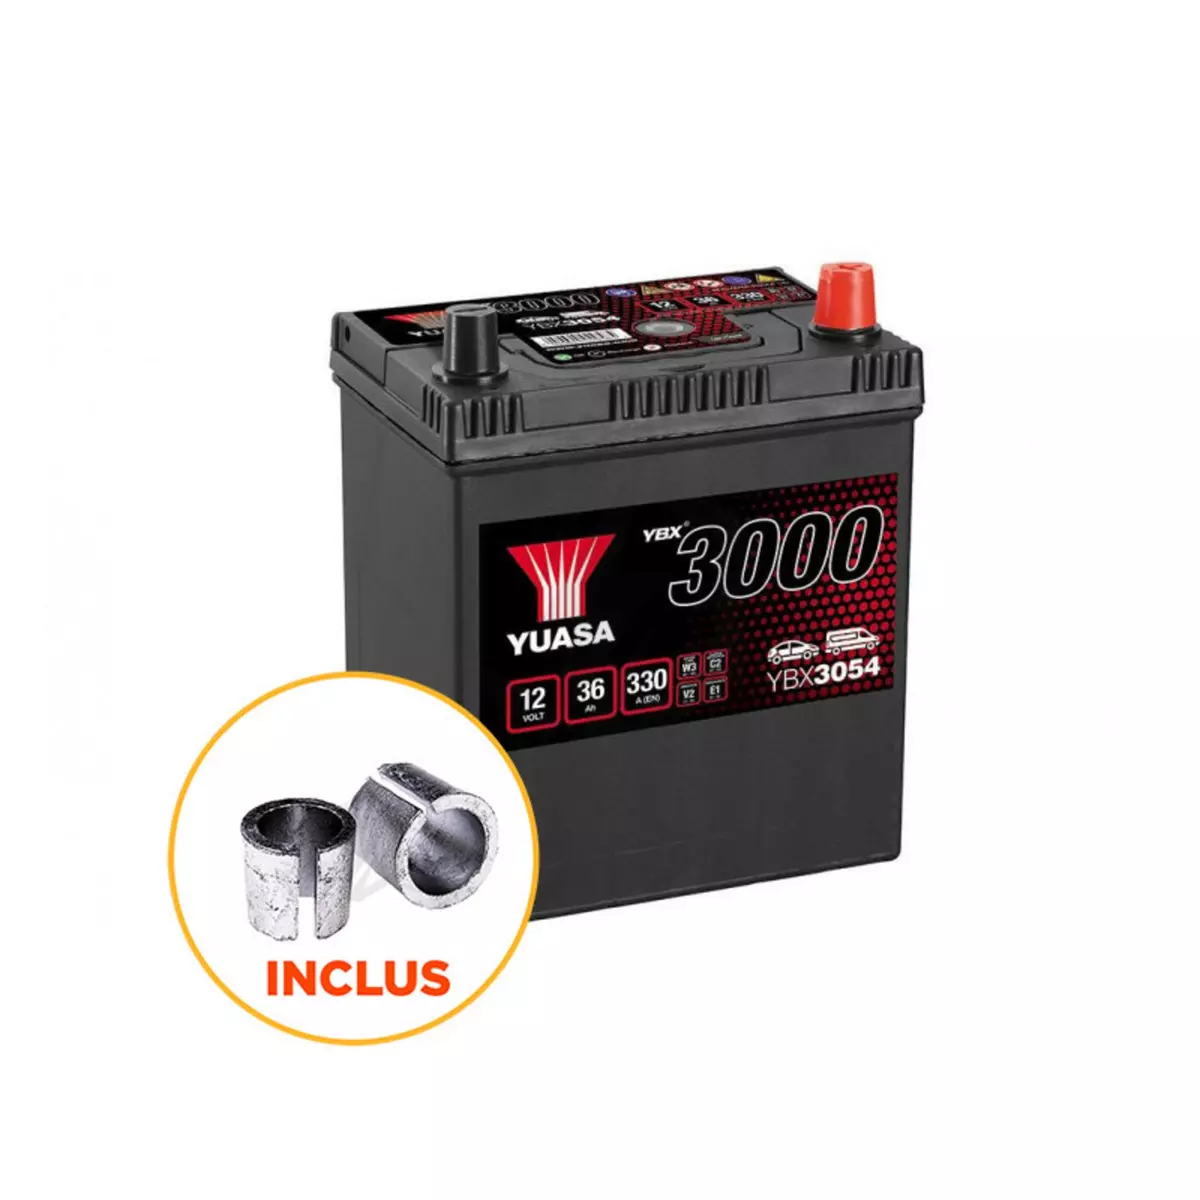 YUASA Batterie Yuasa SMF YBX3054 12V 36ah 330A